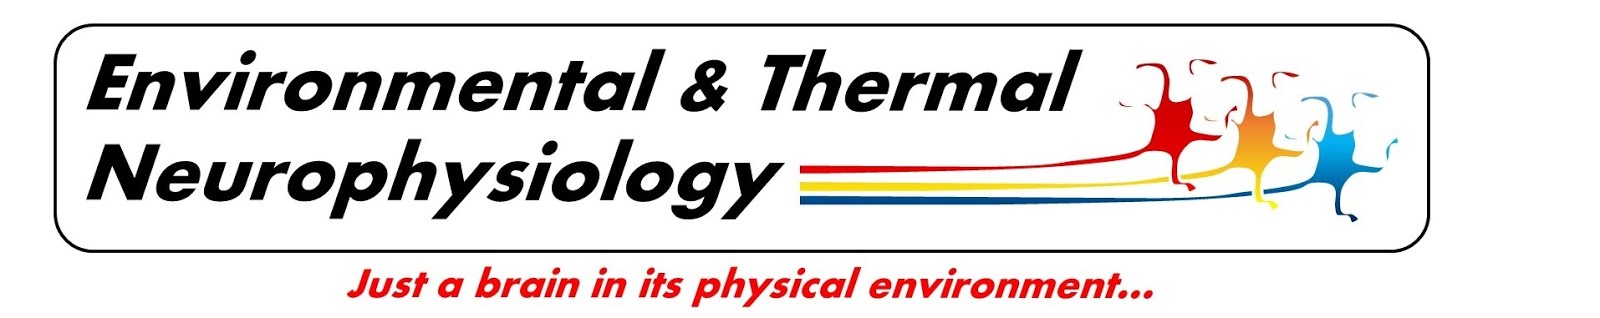 Environmental Thermal Neurophysiology